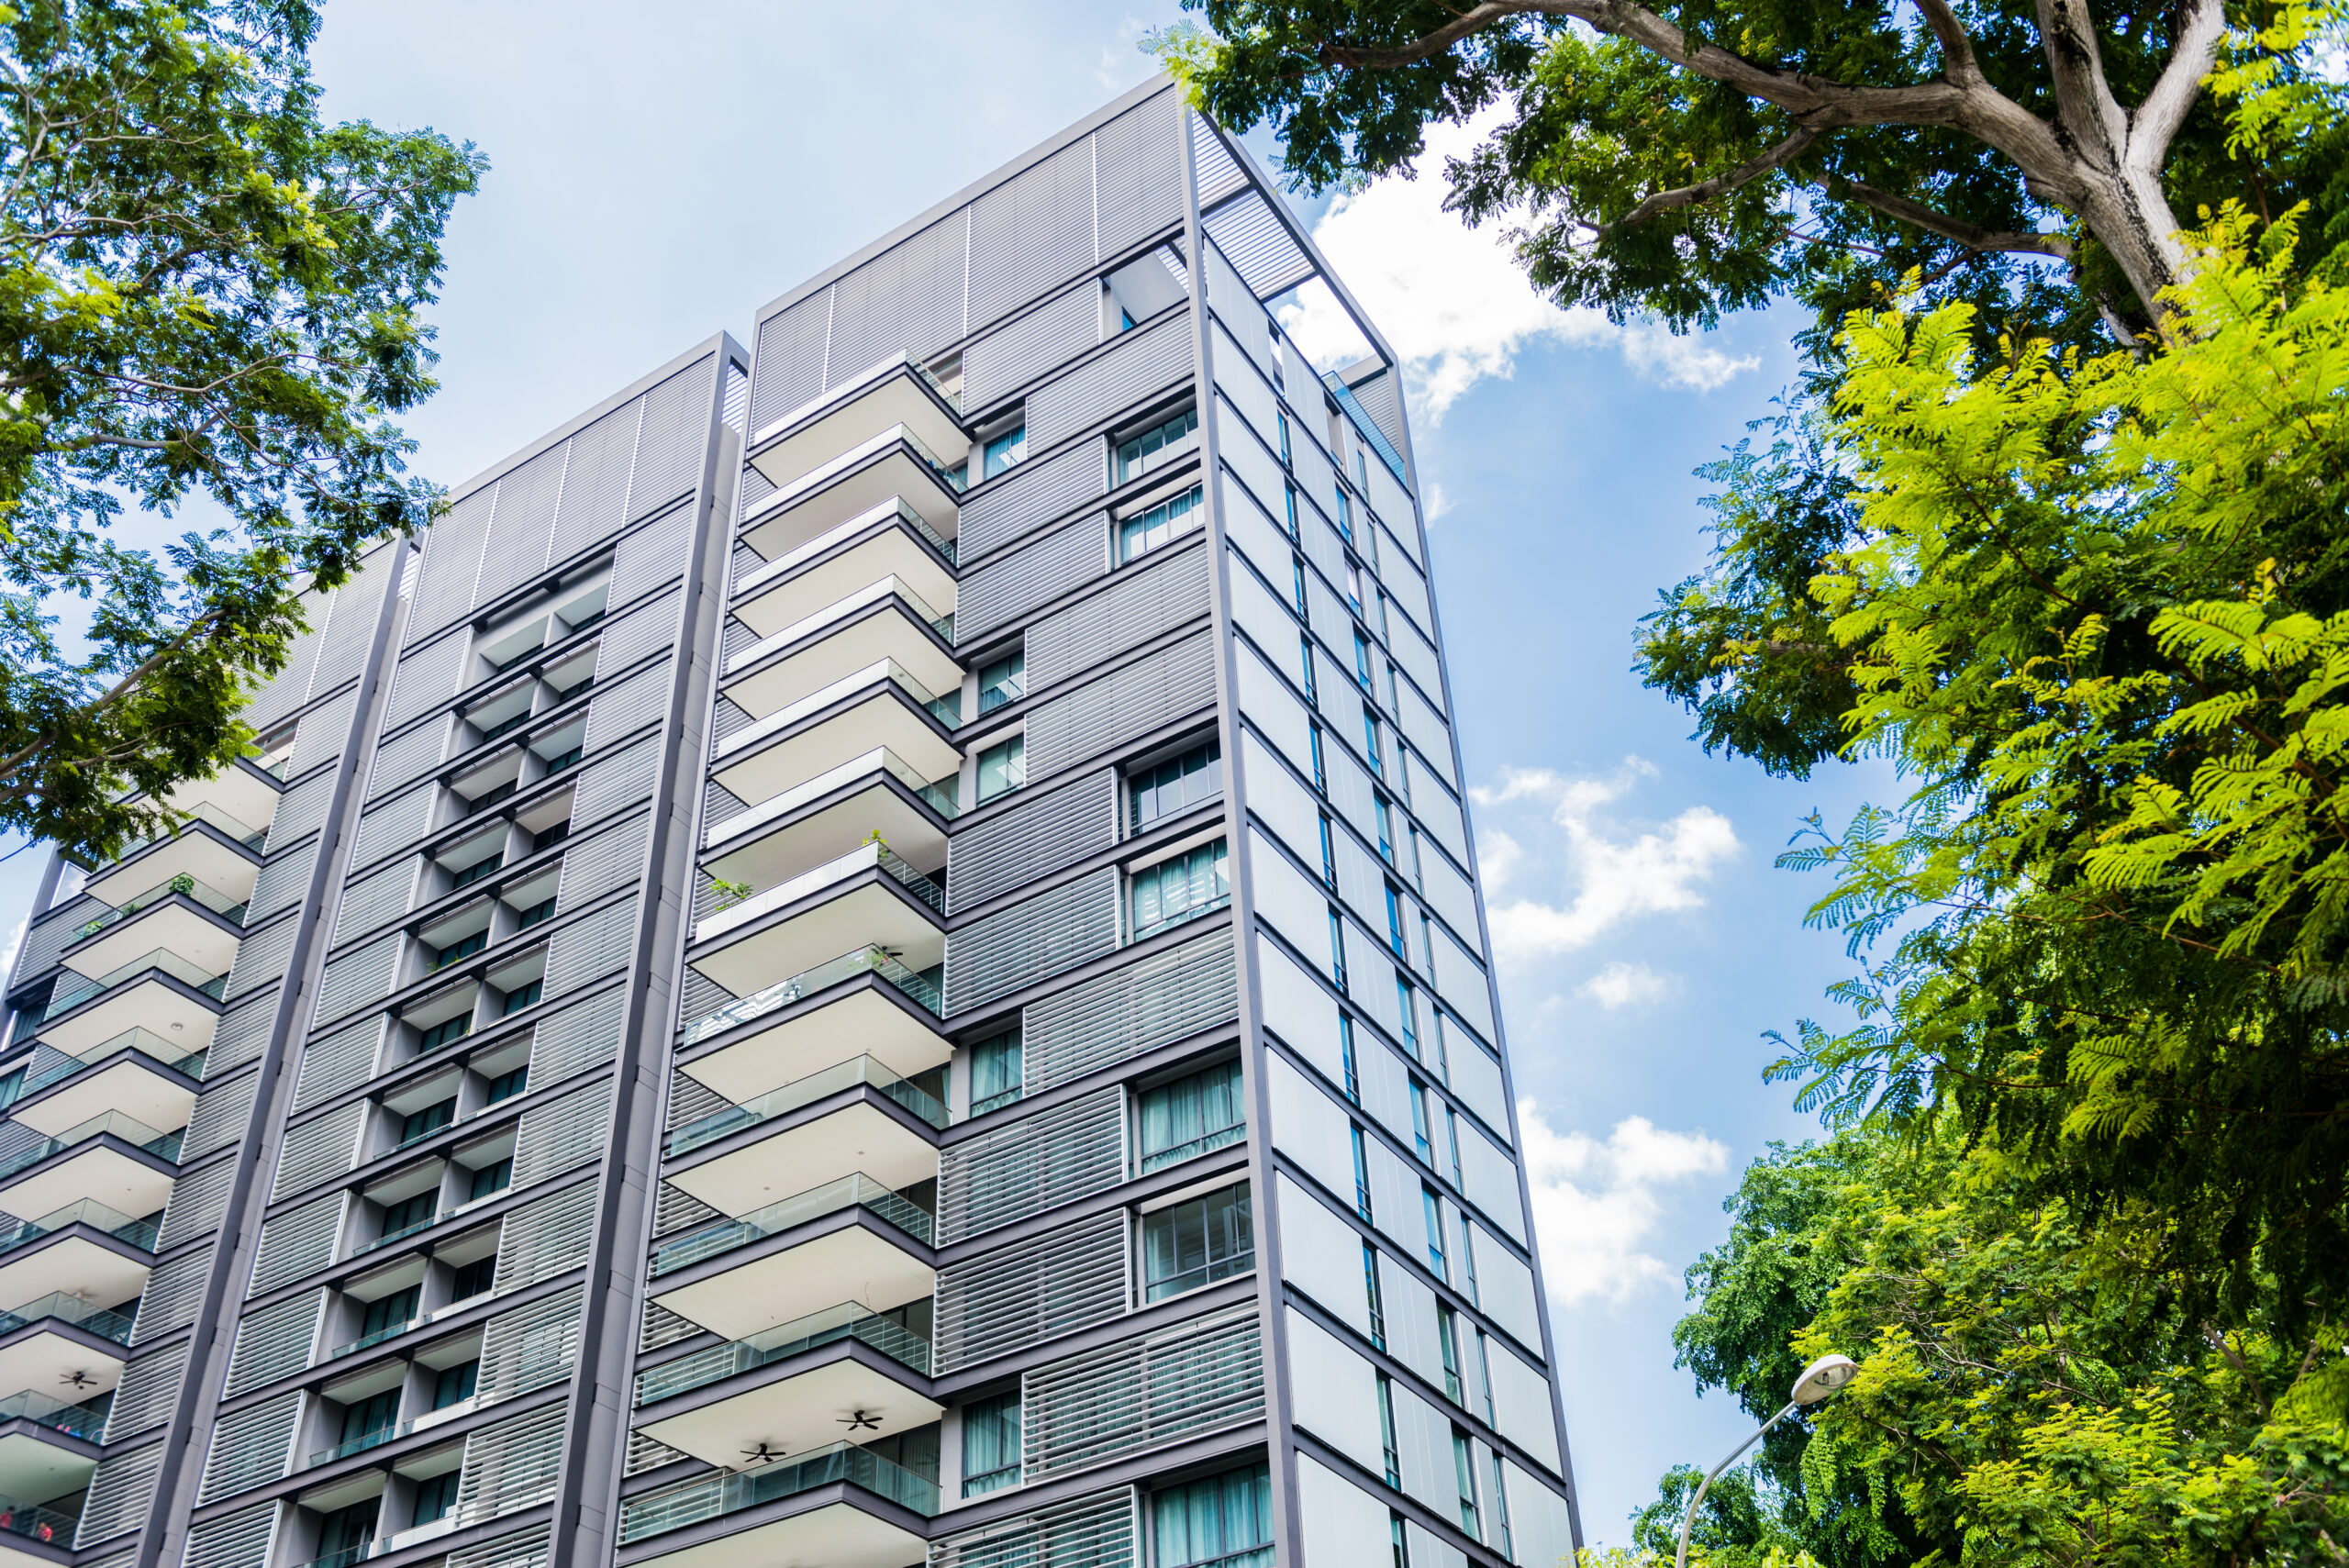 SINGAPORE-JUNE 20: Modern residential estate  in Singapore